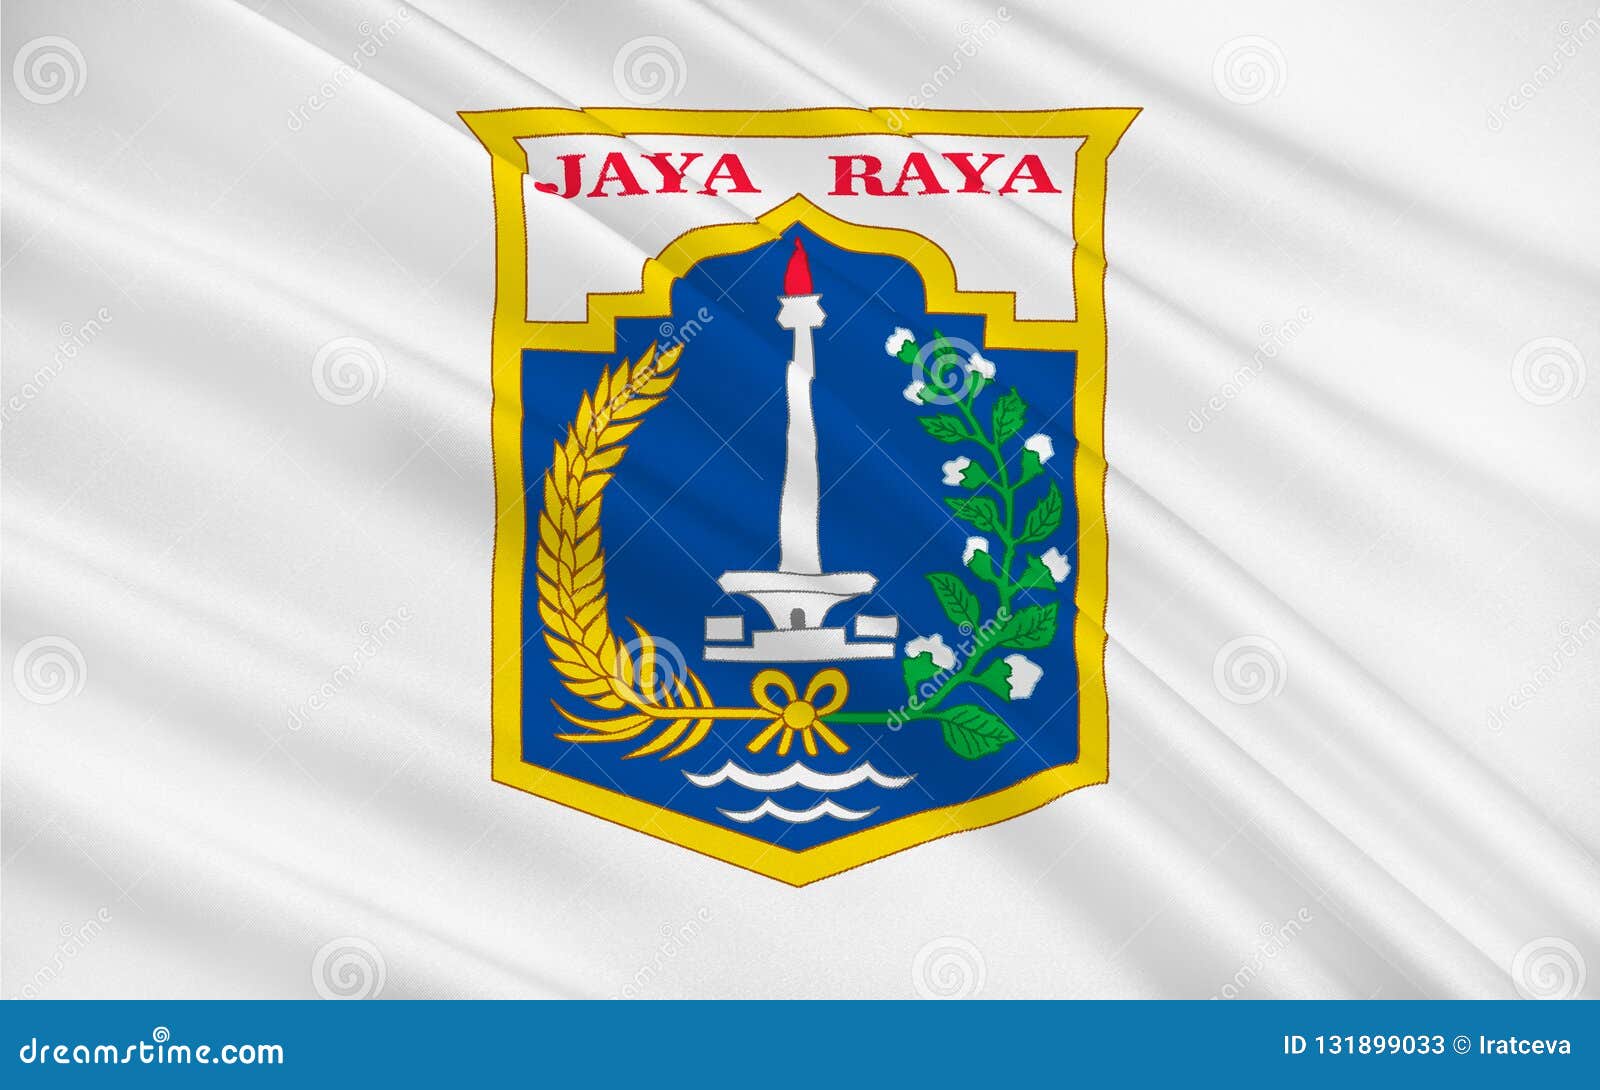  Flag  of Jakarta  Indonesia stock illustration 